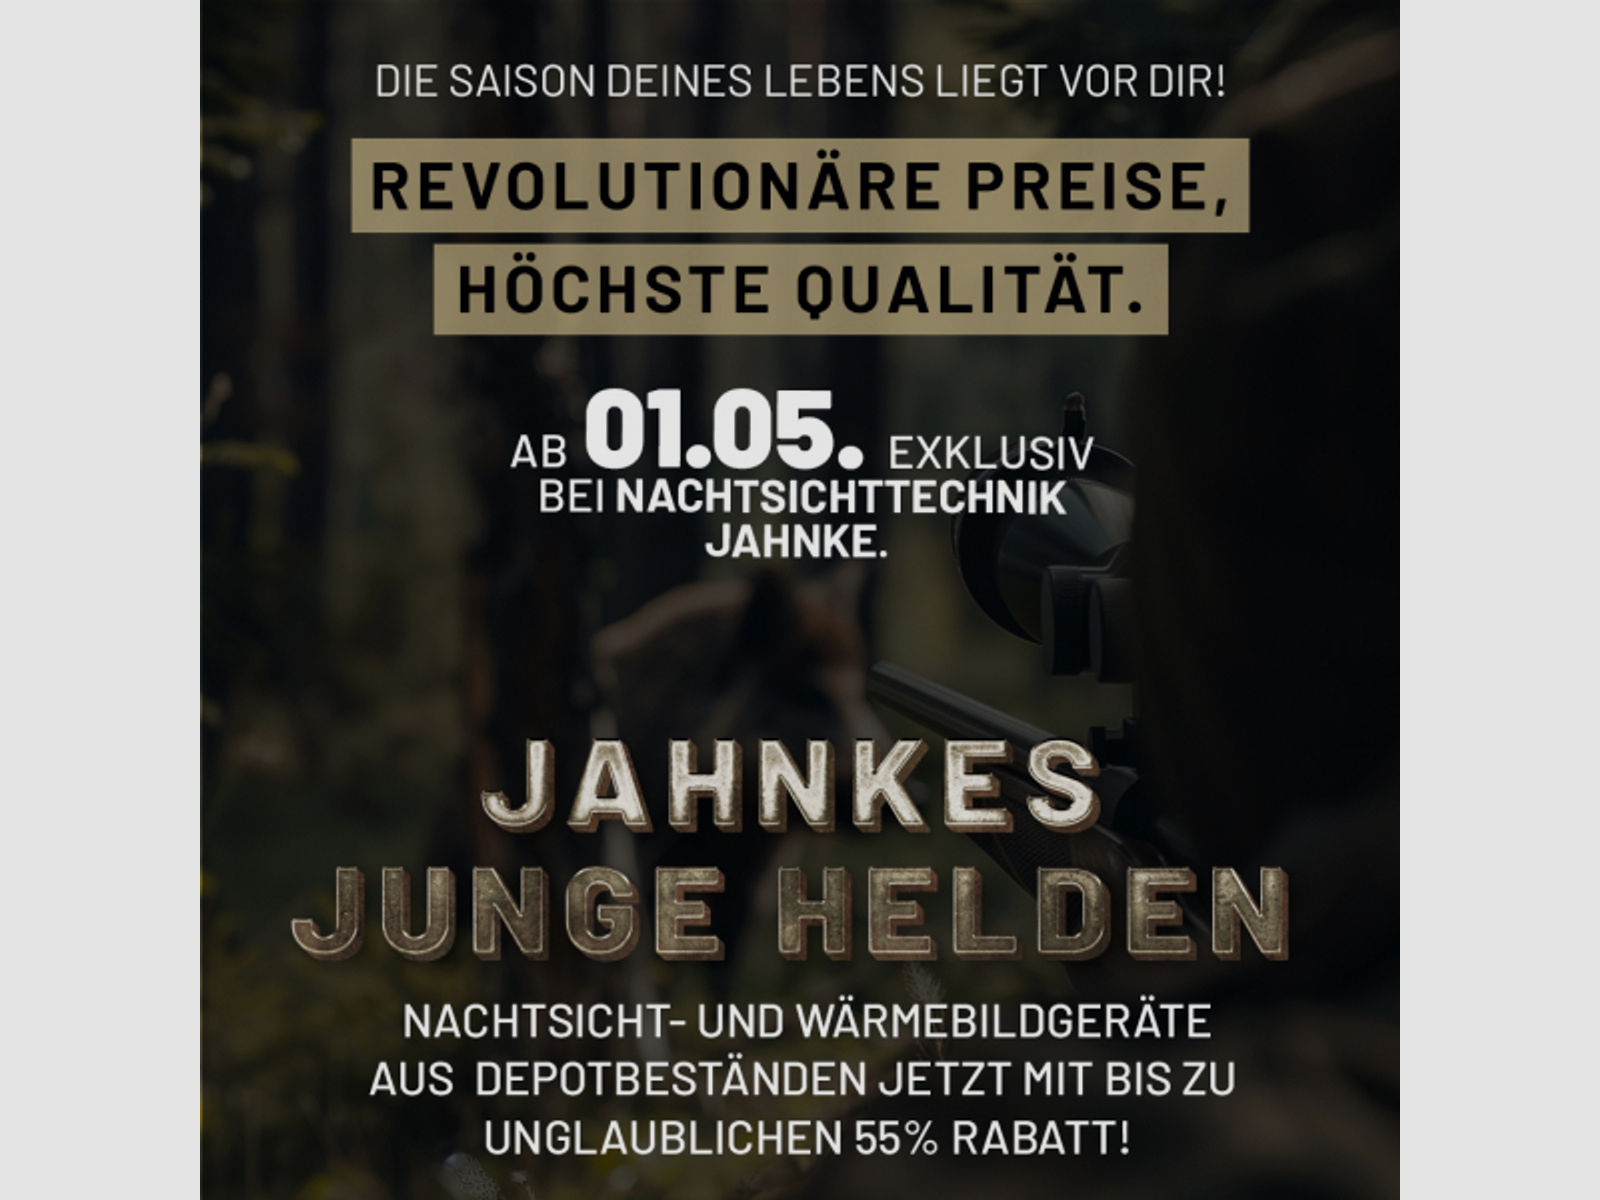 Nachtsichttechnik Jahnke DJ-8 7,5x58 JJH LK 3 S 2, Jahnke Monochrom (Grau)